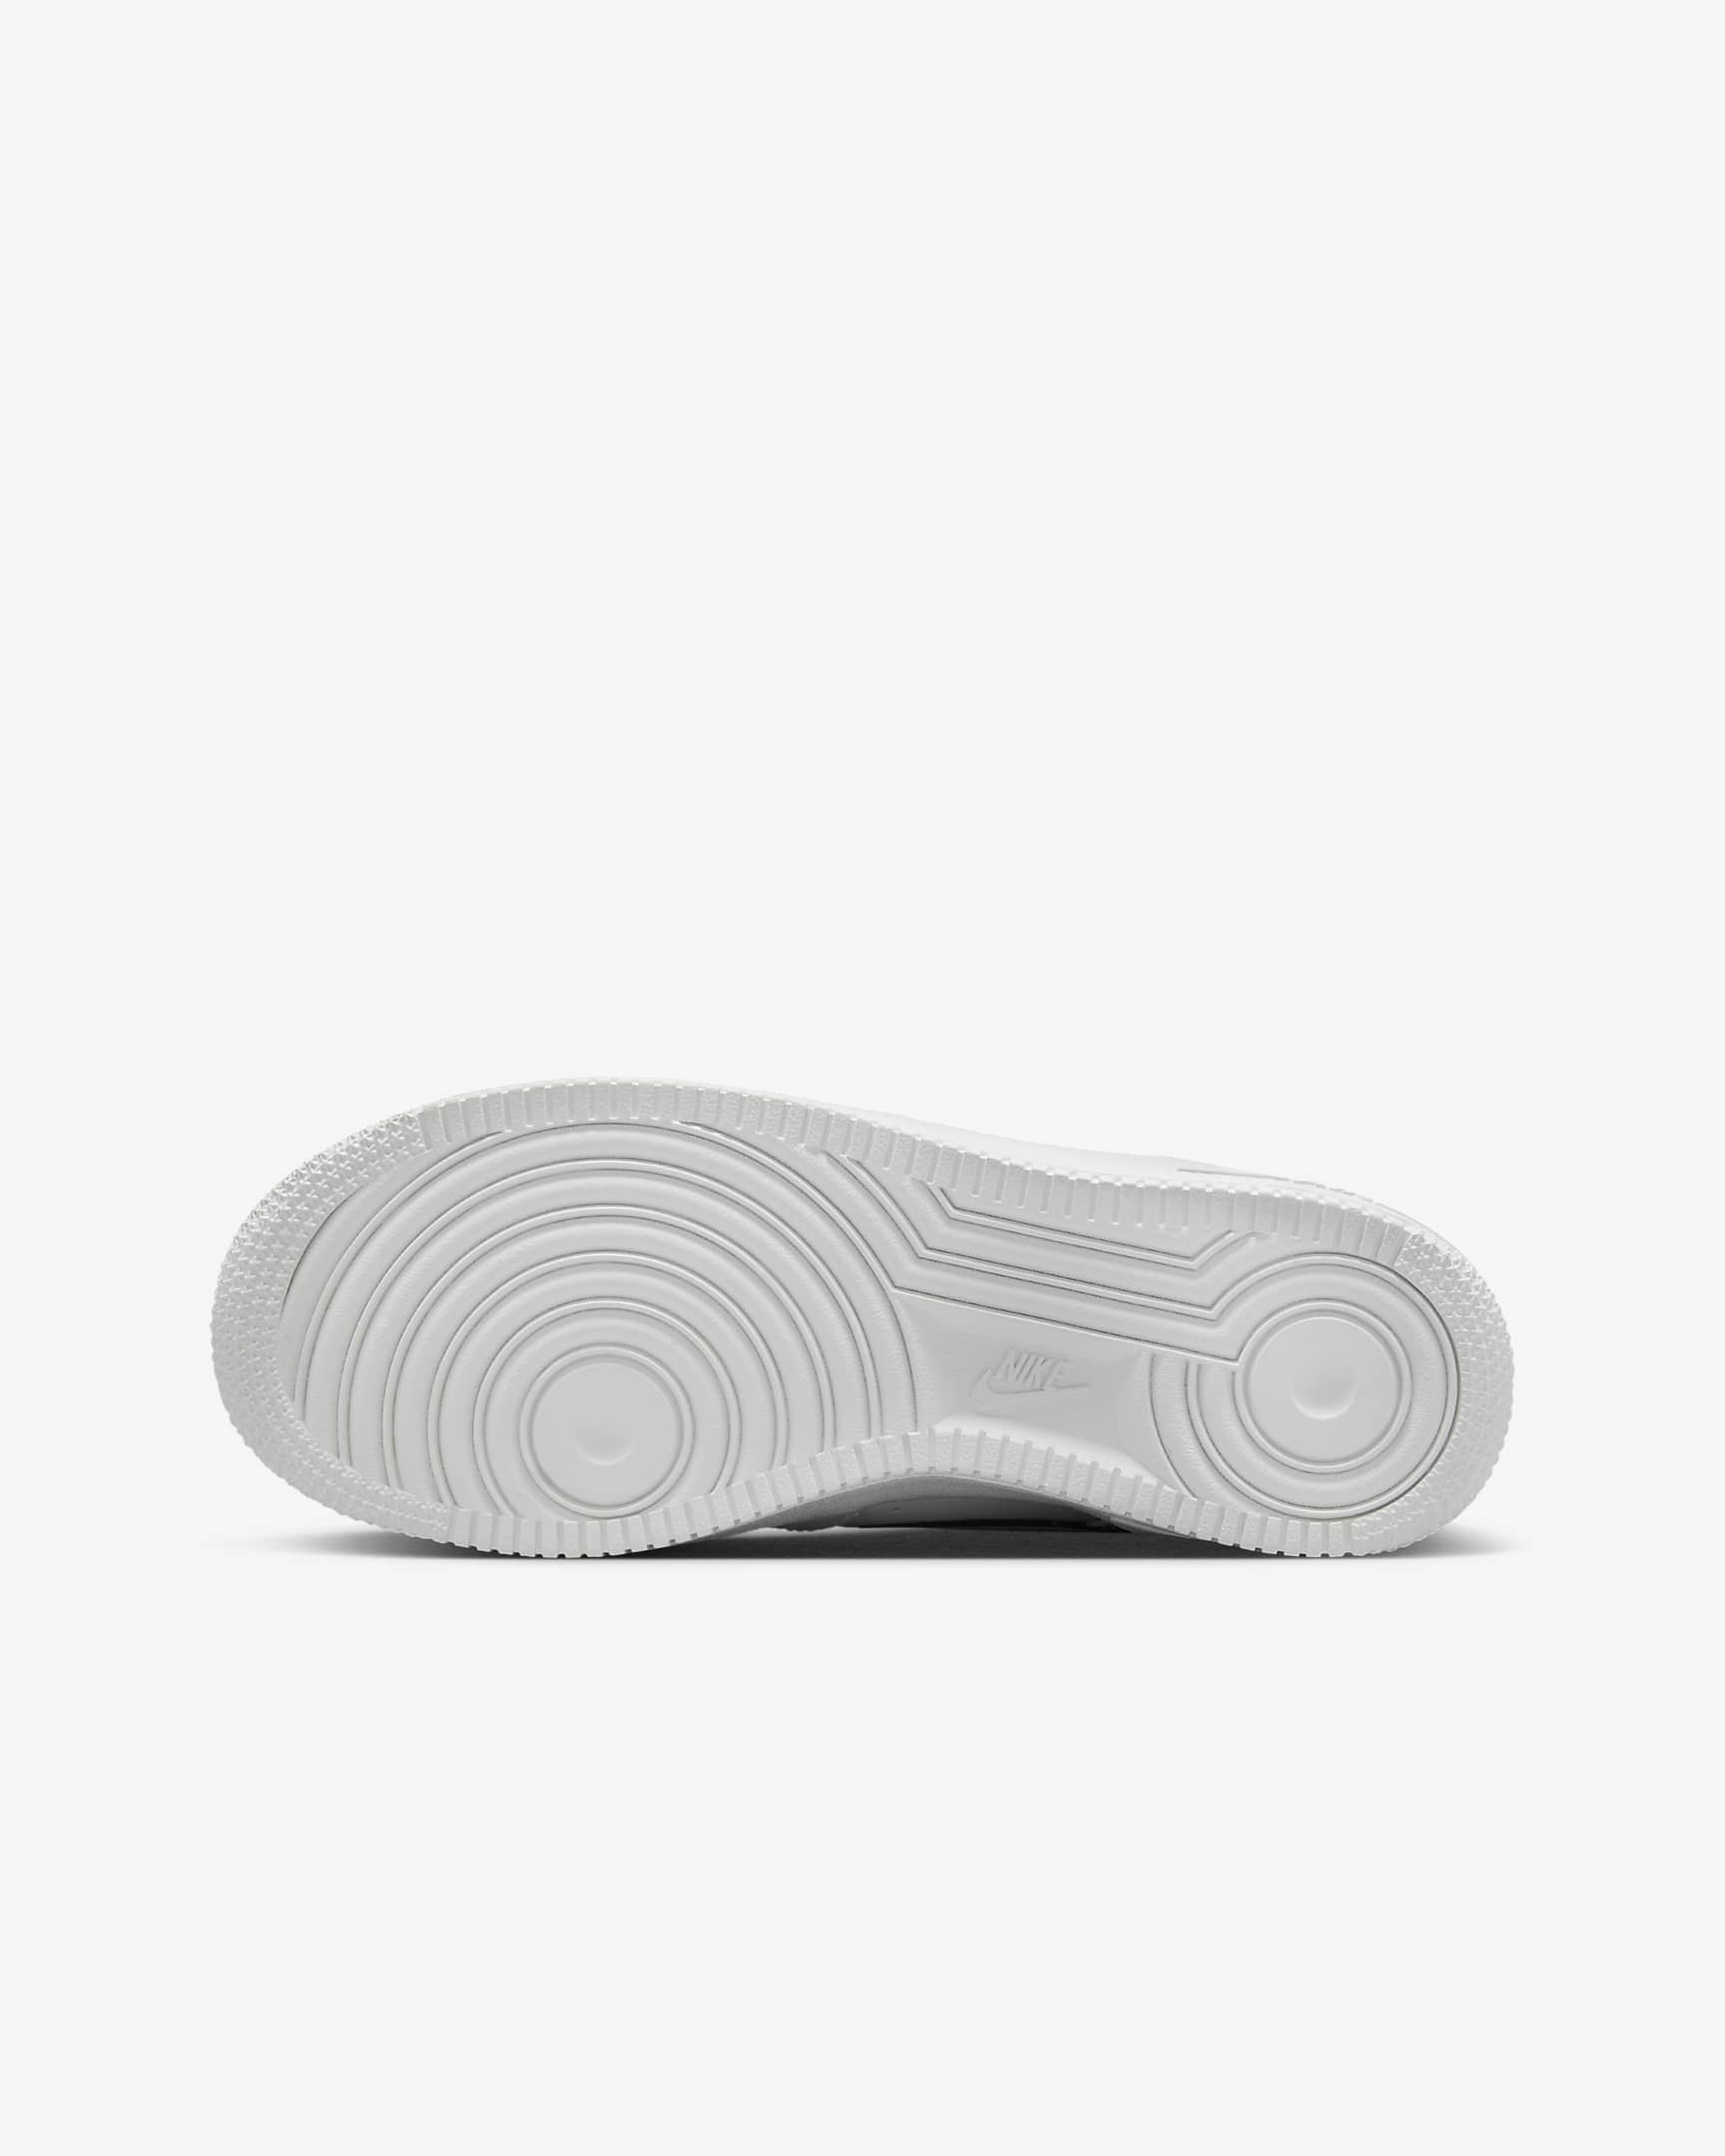 Nike Air Force 1 LV8 3 Older Kids' Shoes - Summit White/Bicoastal/Summit White